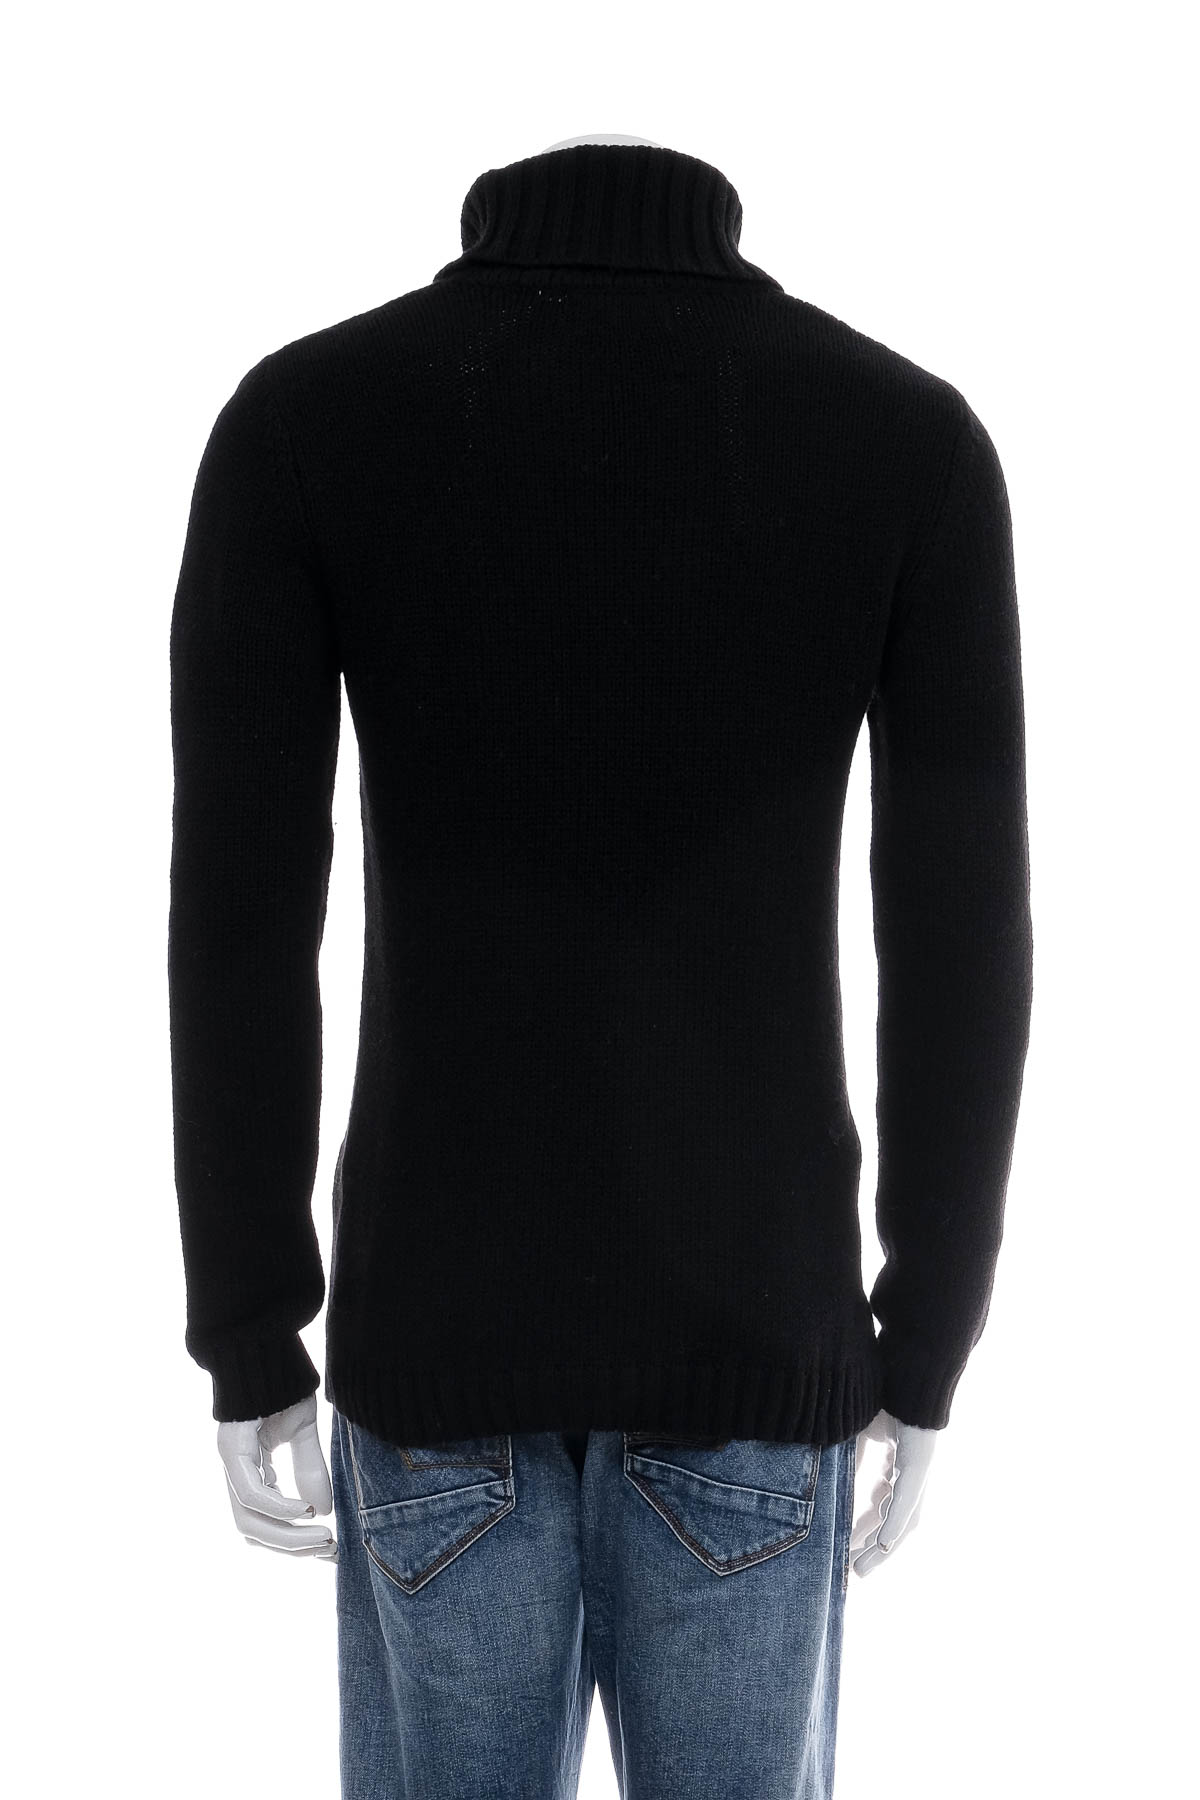 Men's sweater - LOOKS by Wolfgang Joop - 1